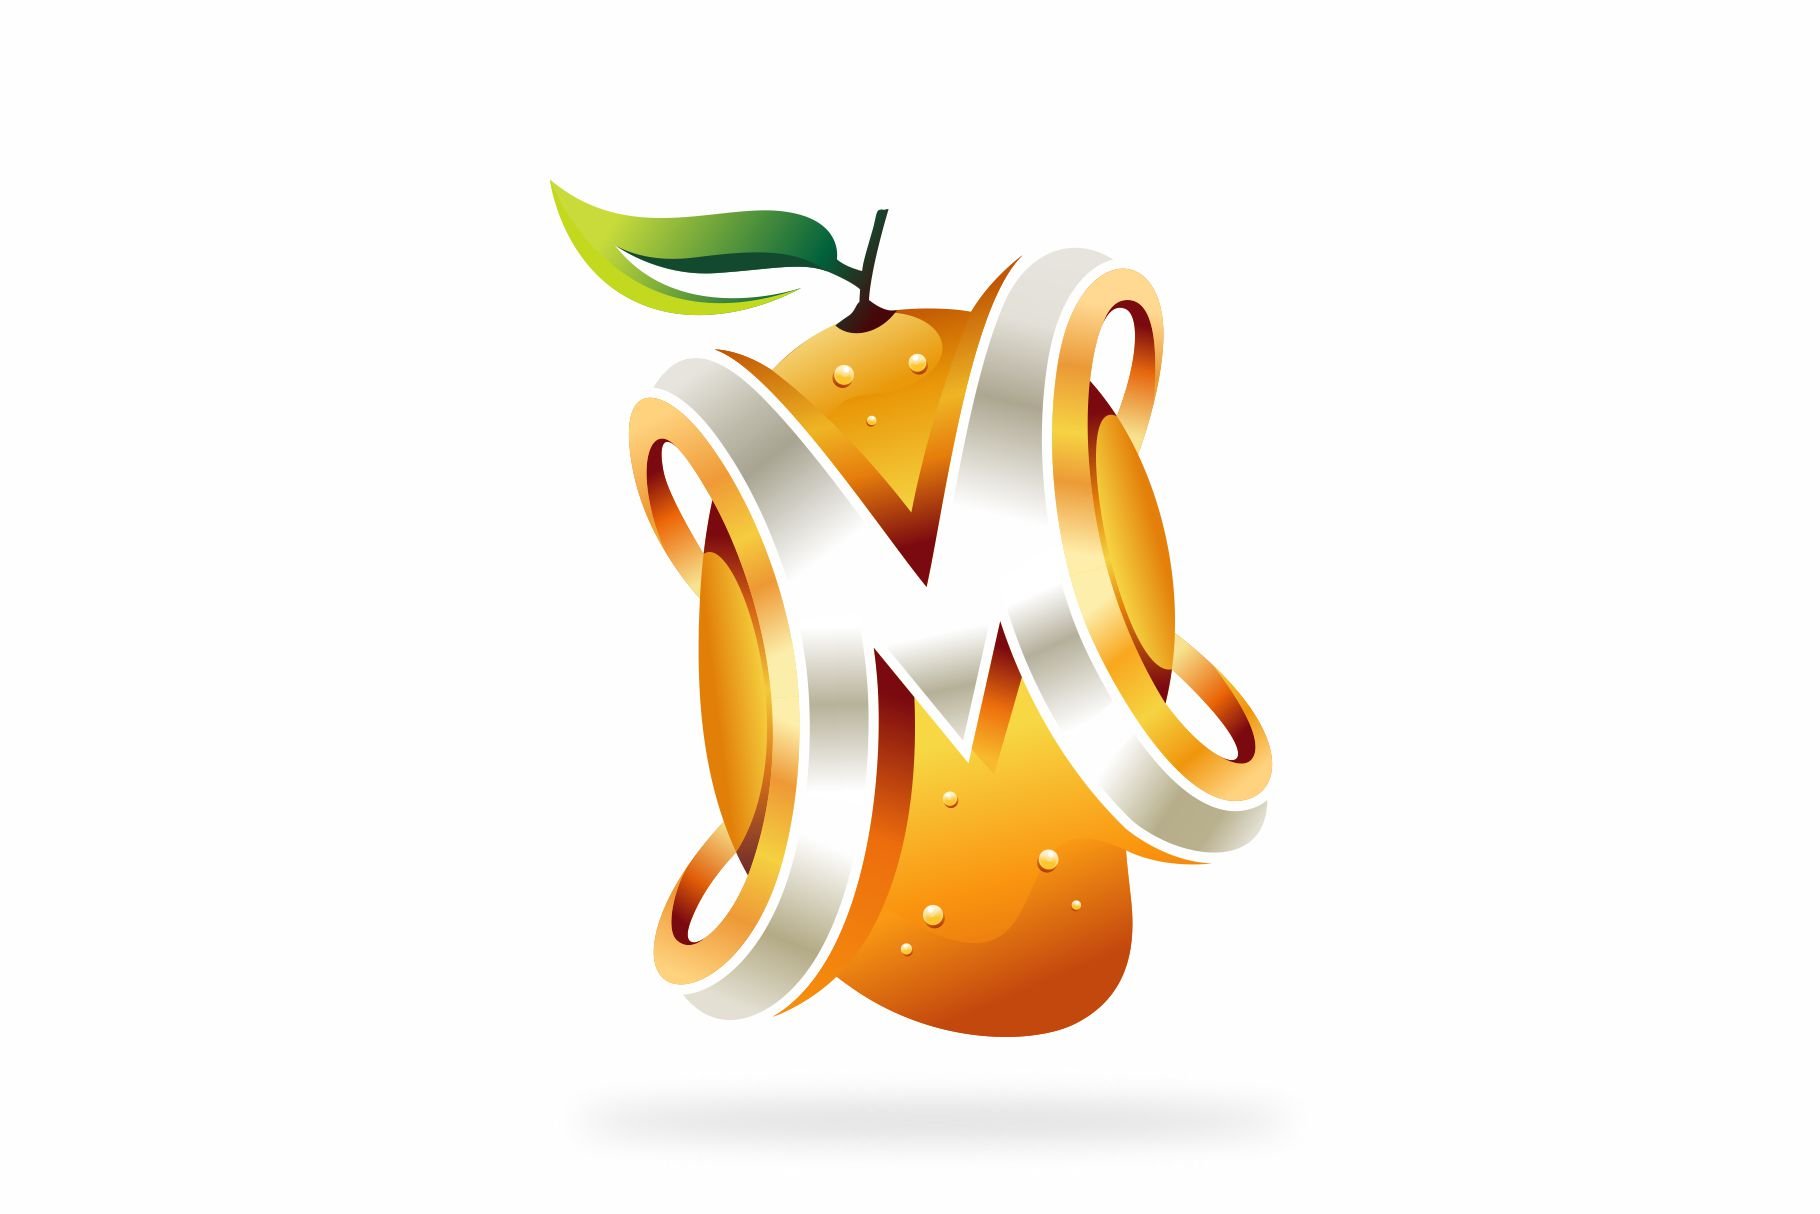 Mango Fruit Letter cover image.